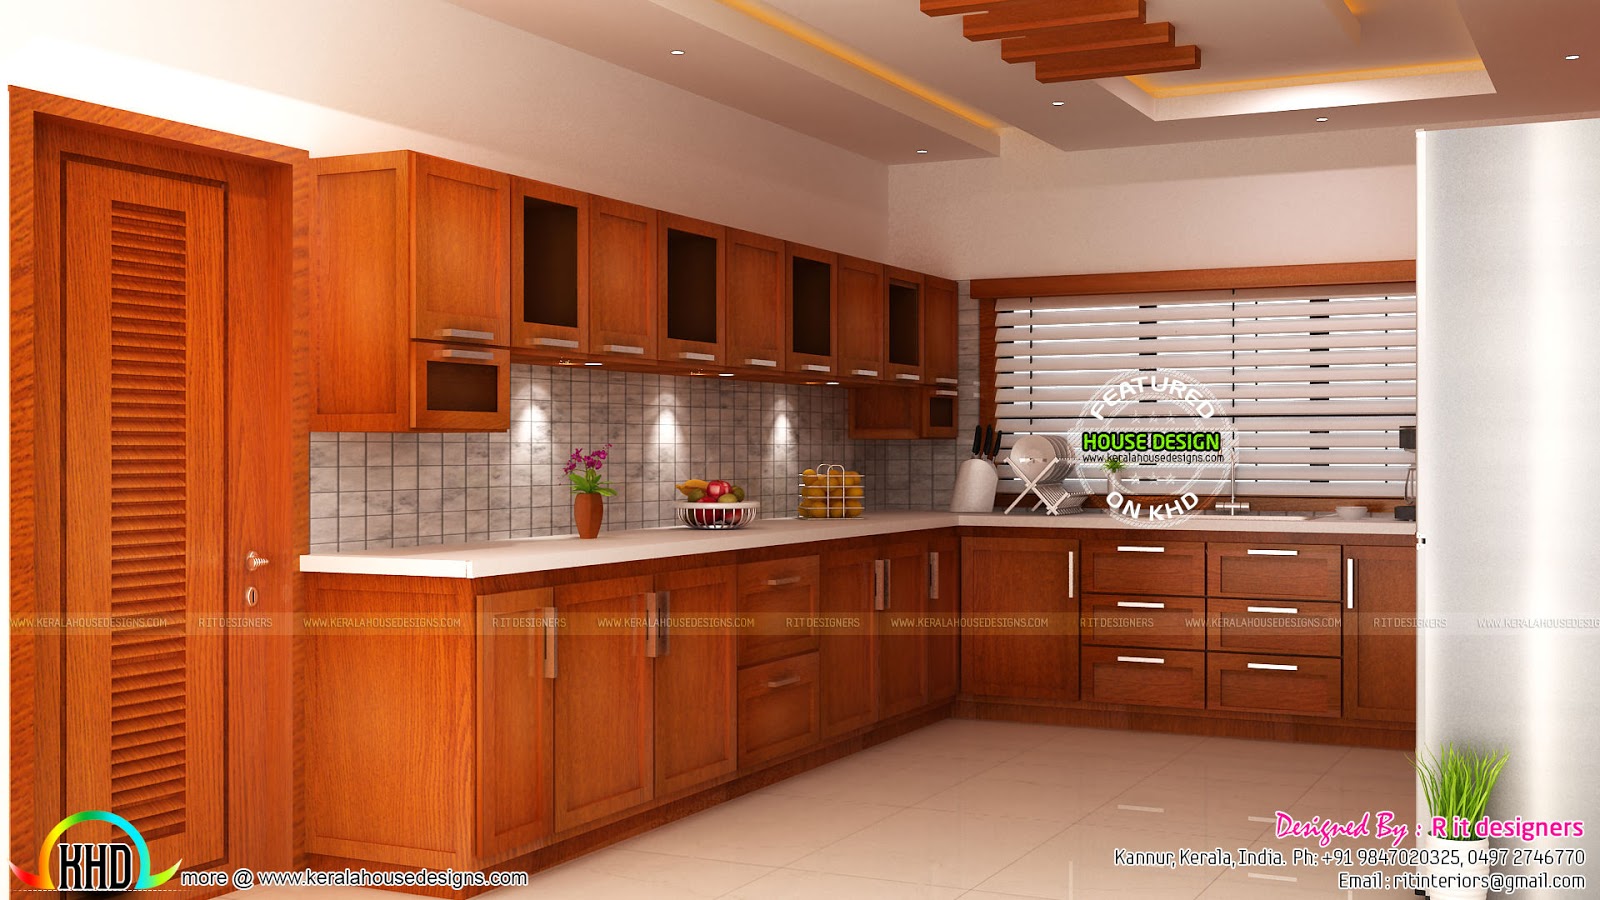 Modular kitchen, living and bedroom interior - Kerala home ...